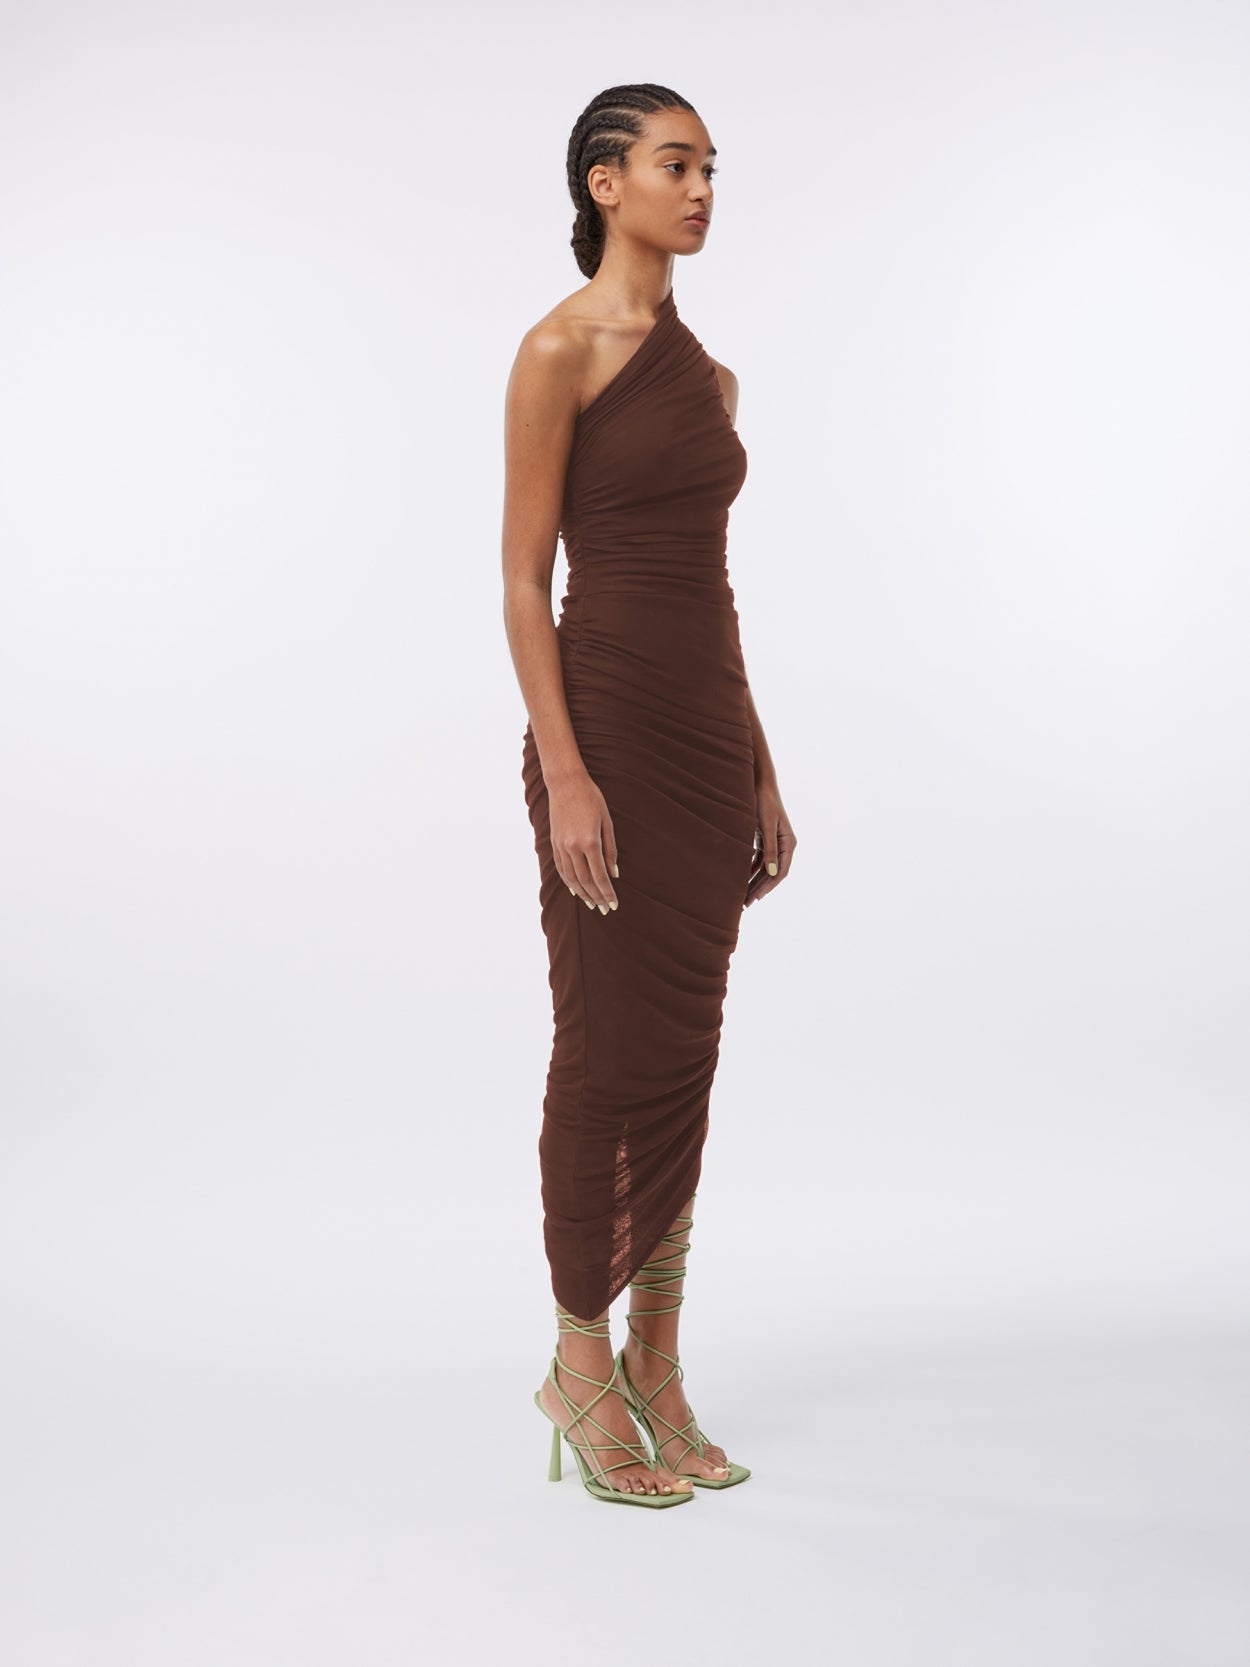 model wearing a one shoulder draped brown dress